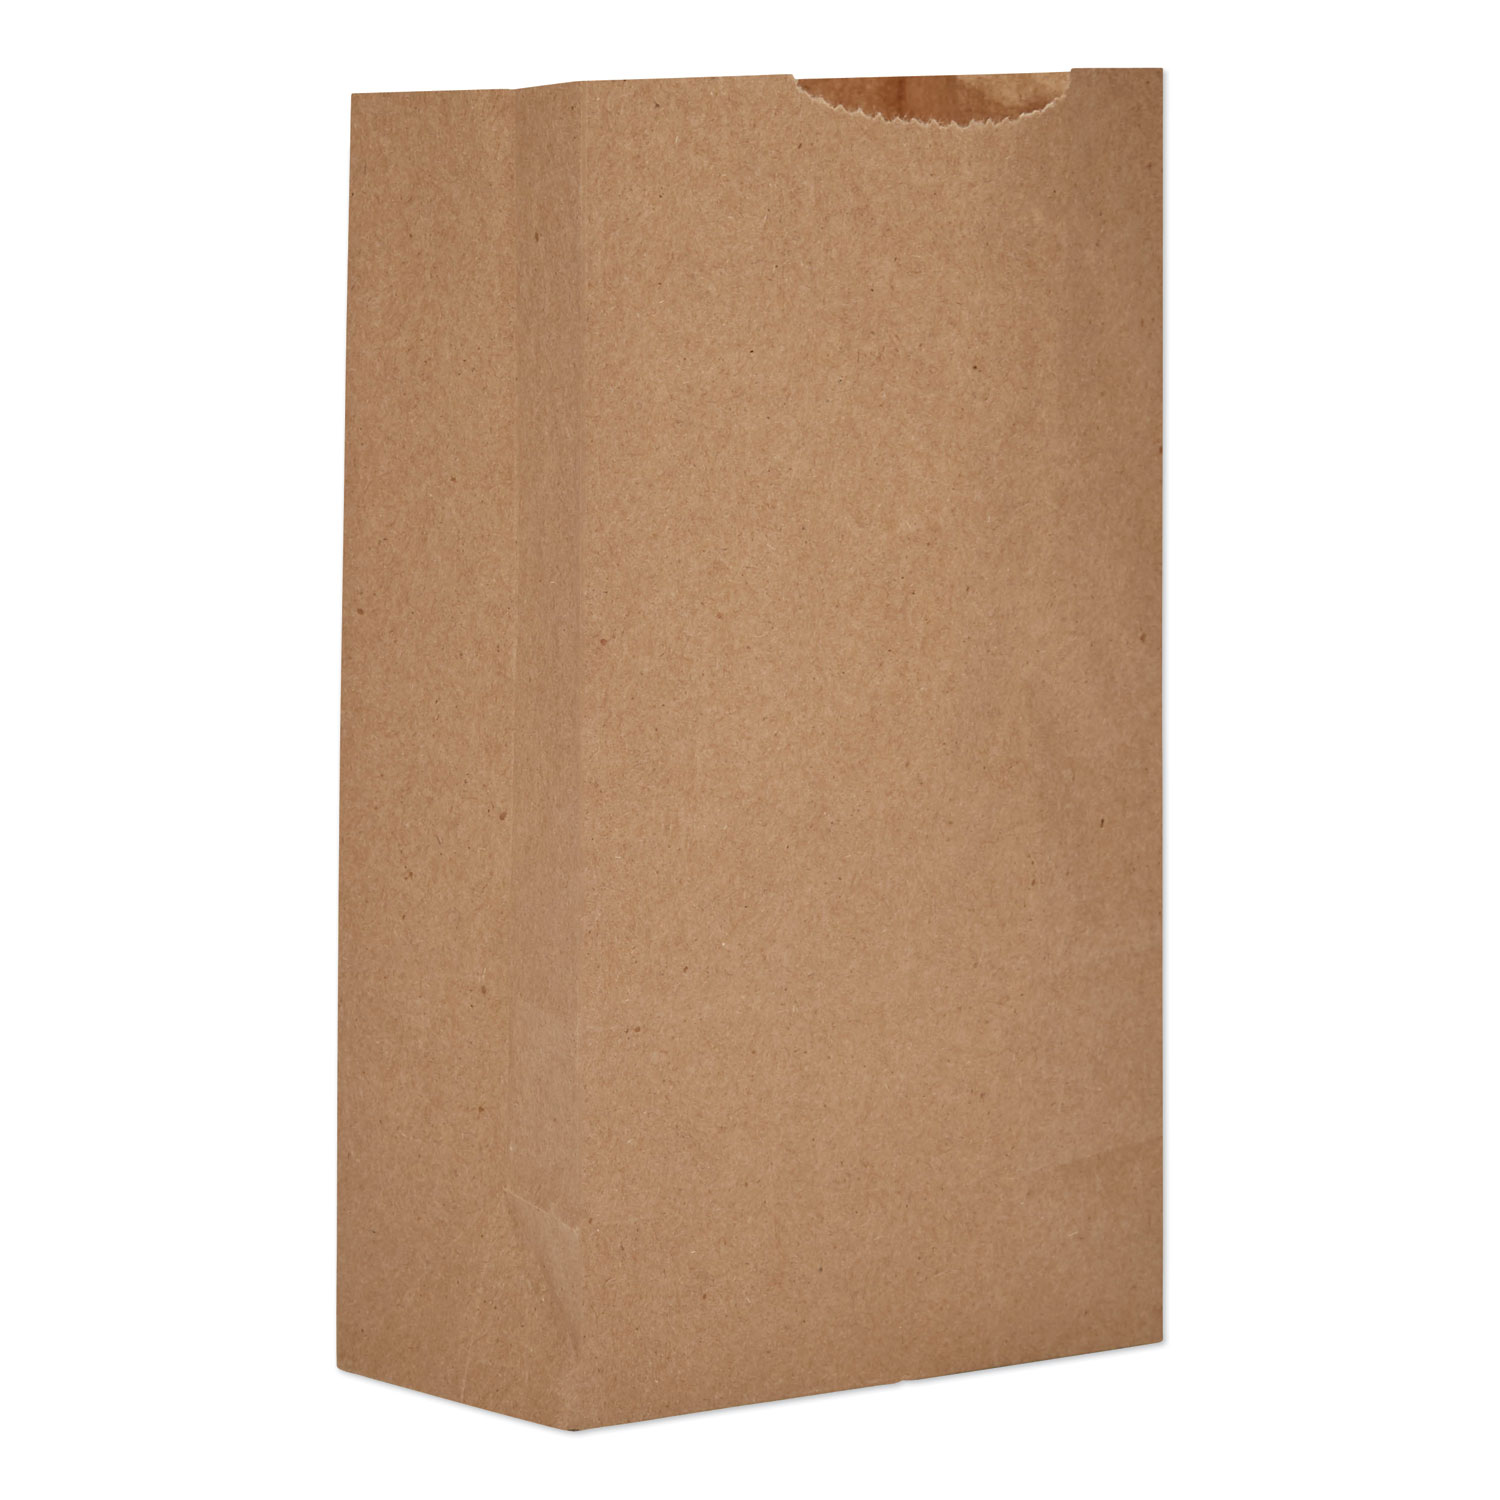  General 18403 Grocery Paper Bags, 30 lbs Capacity, #3, 4.75w x 2.94d x 8.56h, Kraft, 500 Bags (BAGGK3500) 